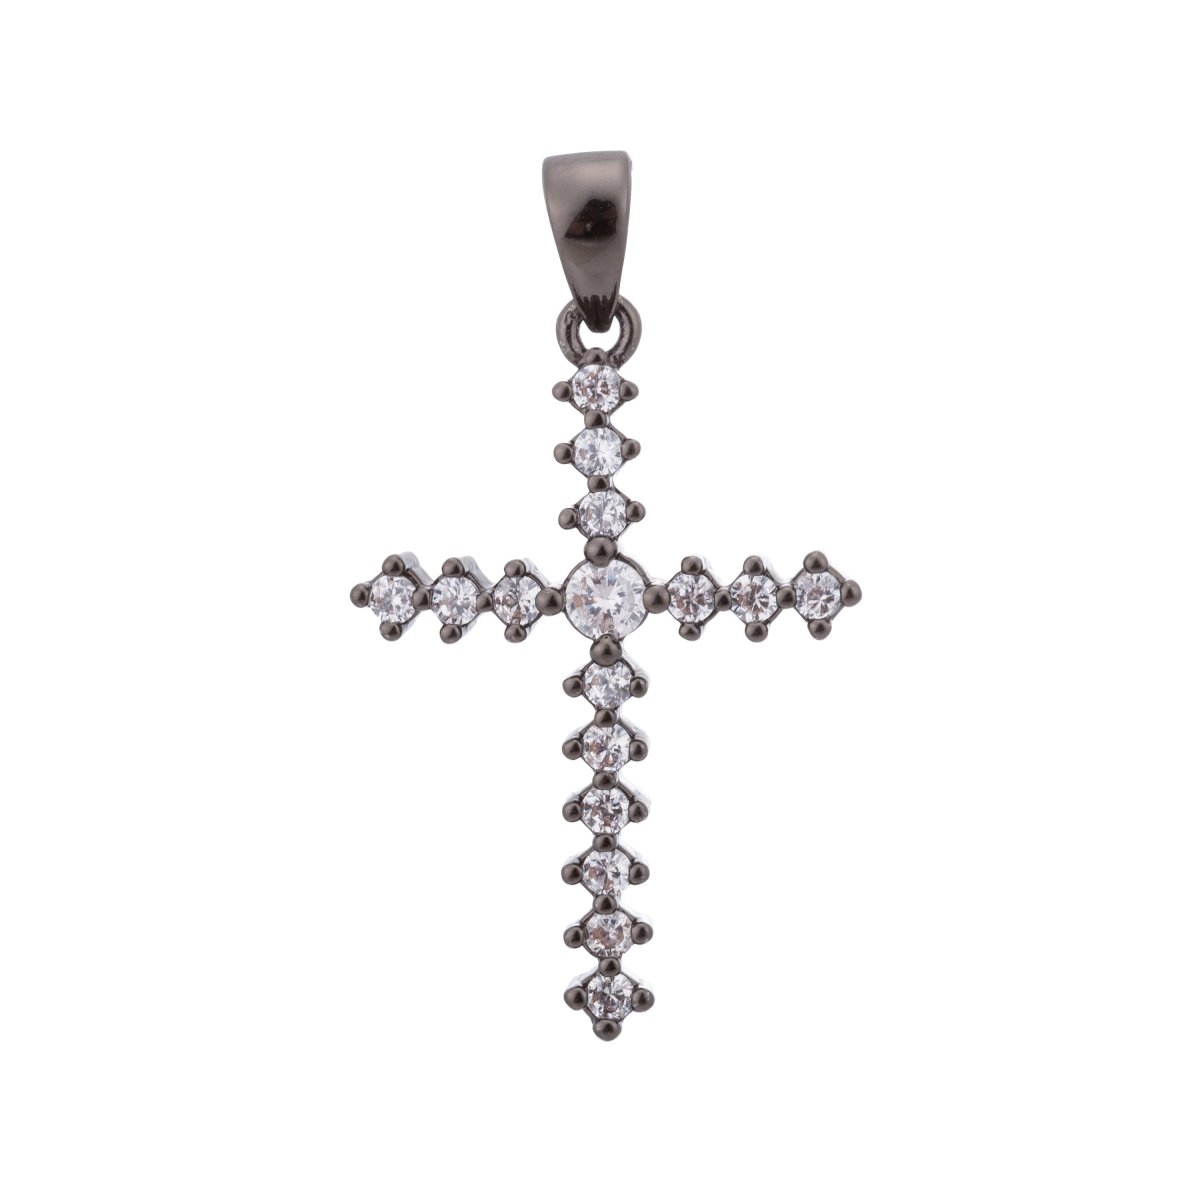 Black Cross, Faith, Believe, Love, Peace, Joy, Jesus, Religious, Girl, Cubic Zirconia Necklace Pendant Bails Findings for Jewelry Making H-651 - DLUXCA